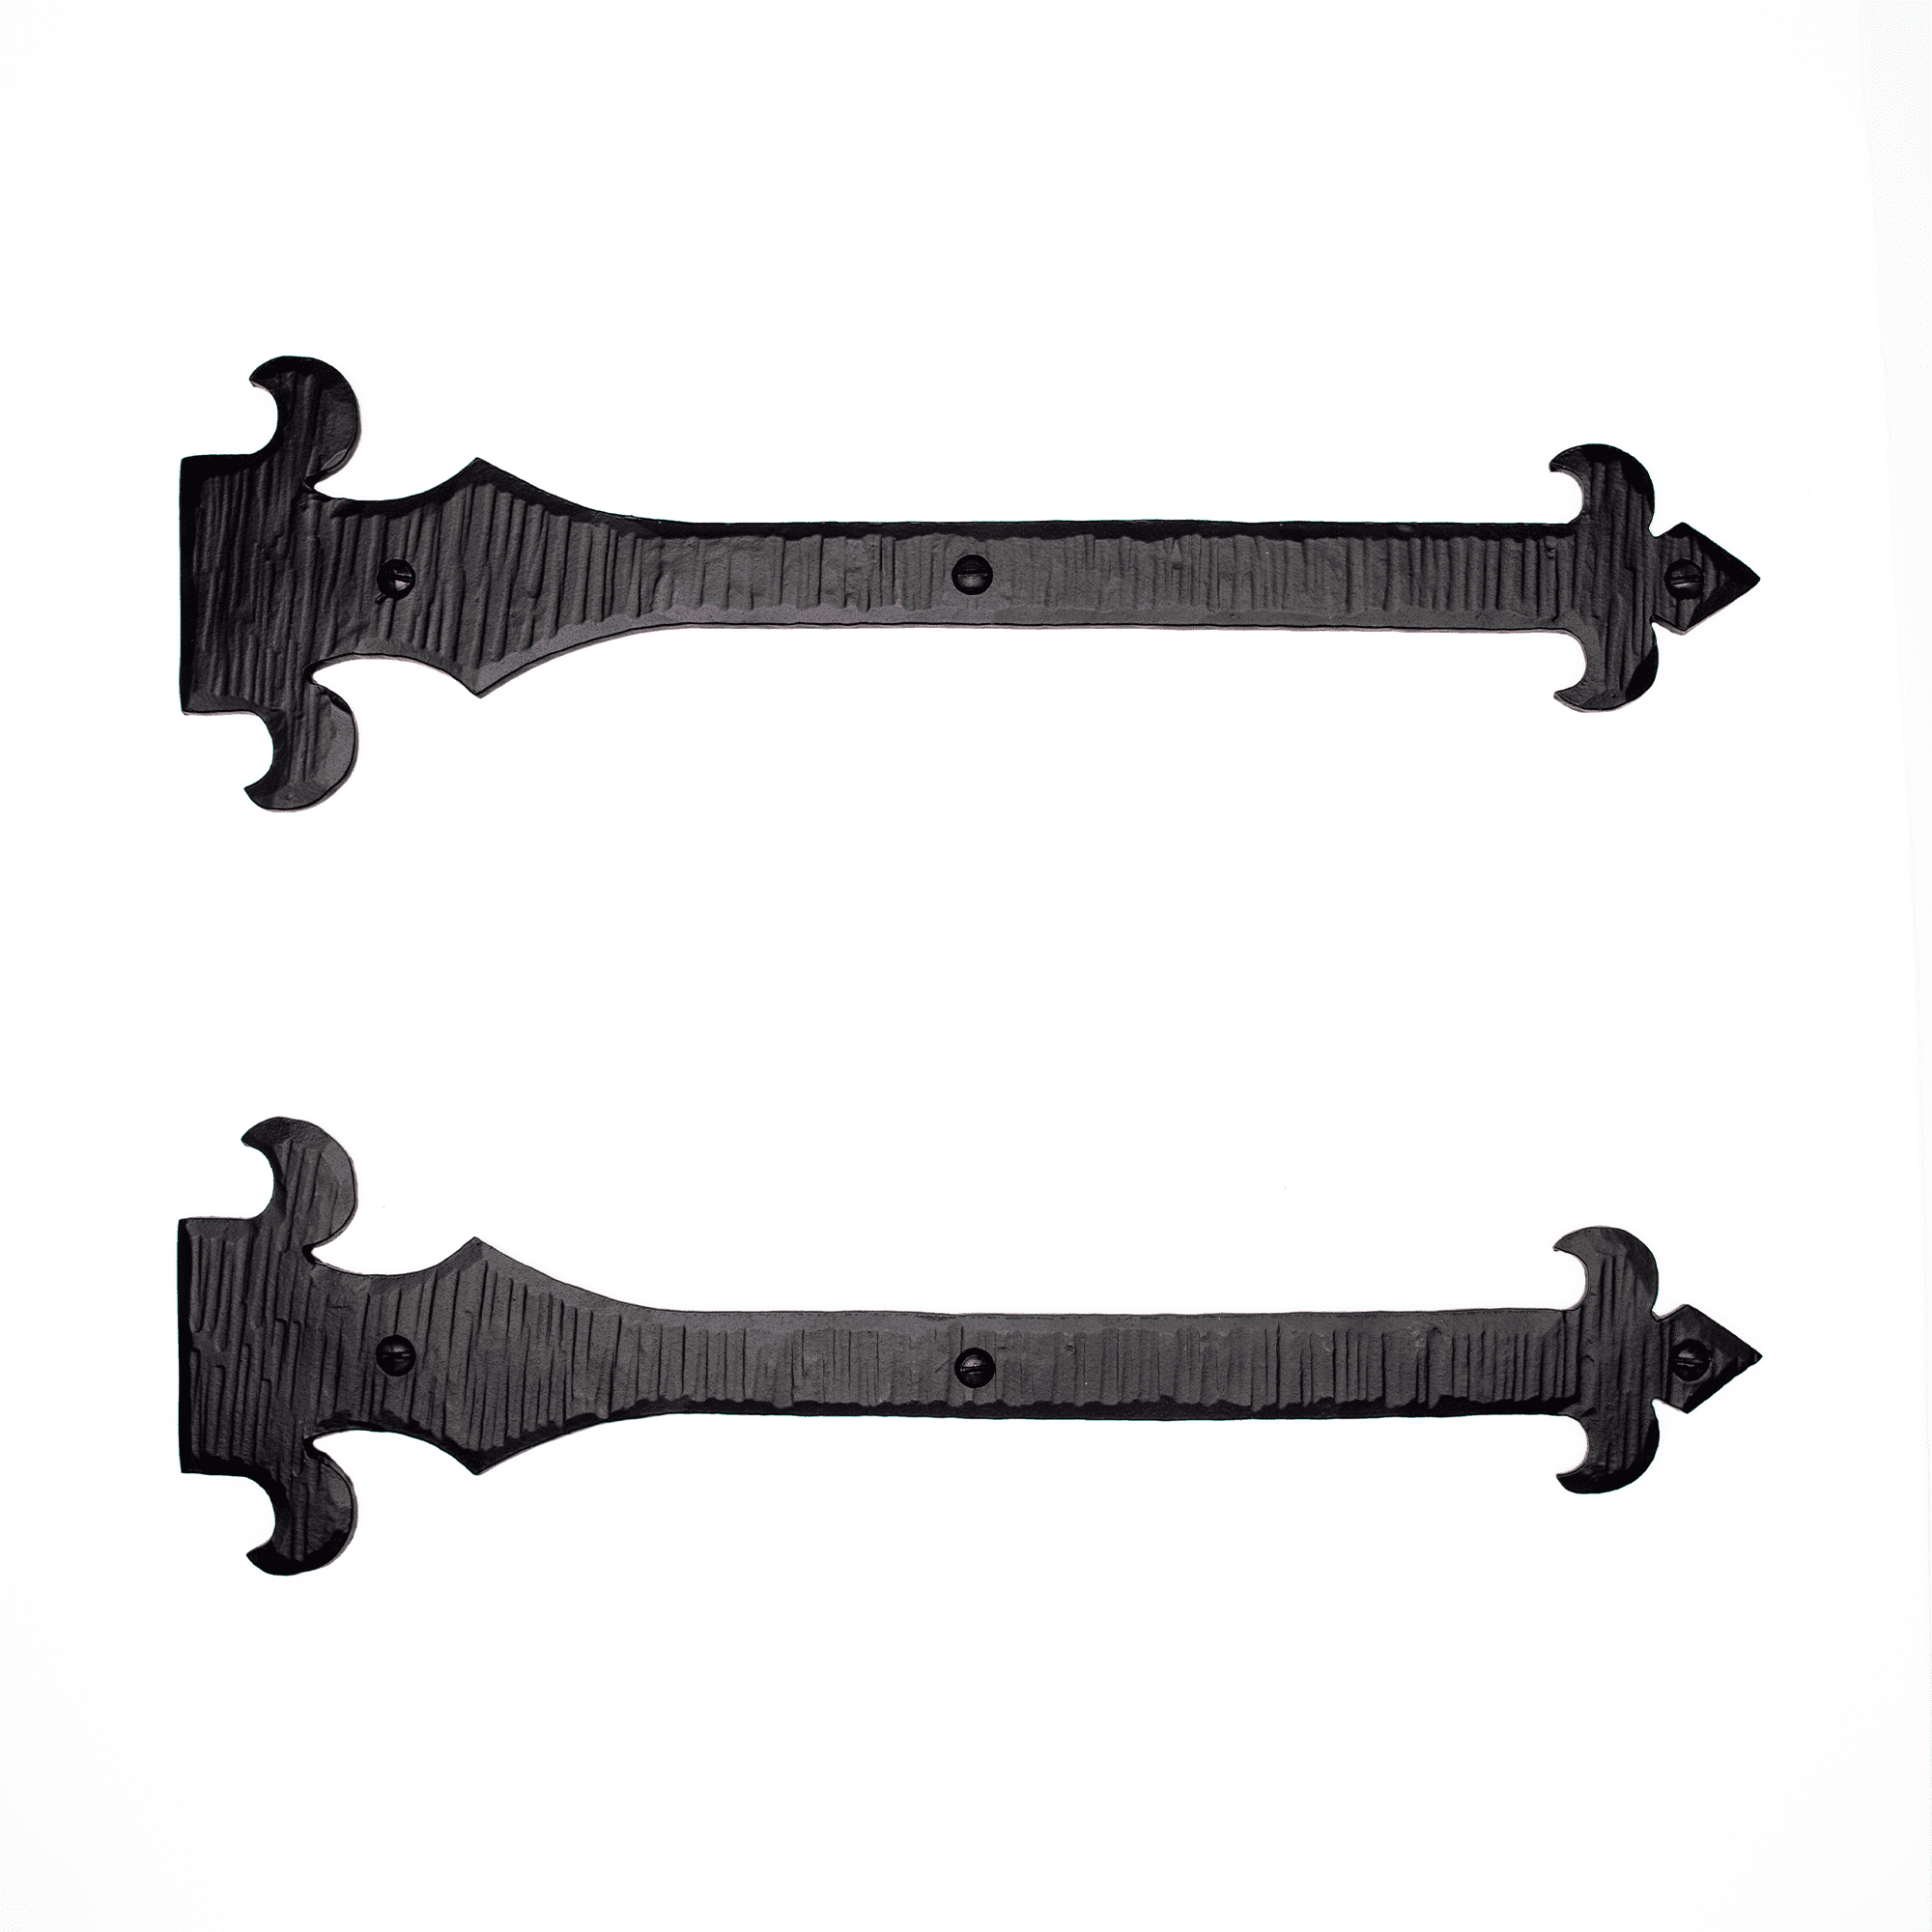 Ornamental Iron Strap Hinges: Custom Blacksmith Hand Forged Hardware